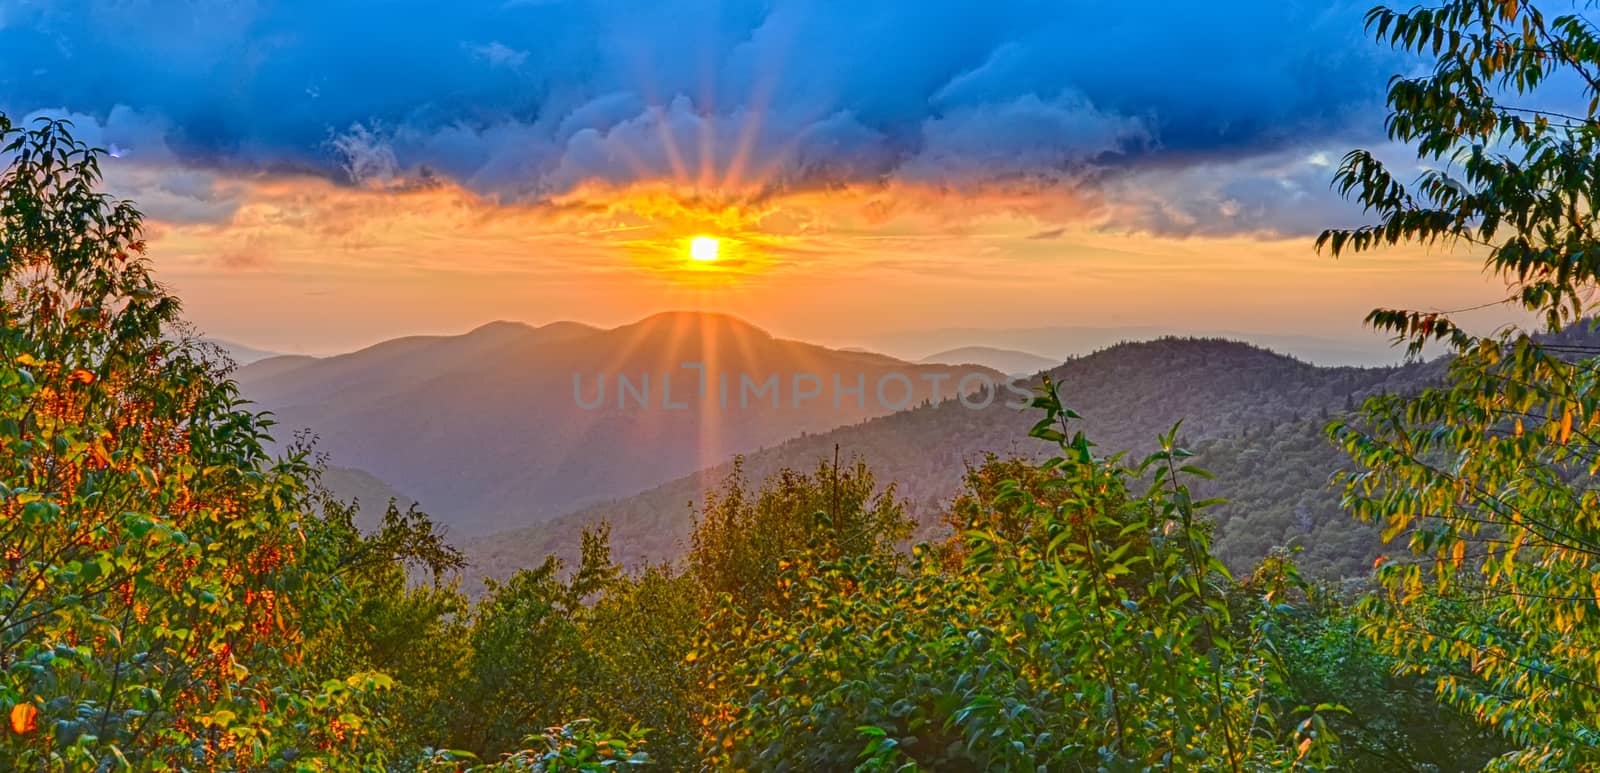 Blue Ridge Parkway late summer Appalachian Mountains Sunset Western NC Scenic Landscape vacation destination